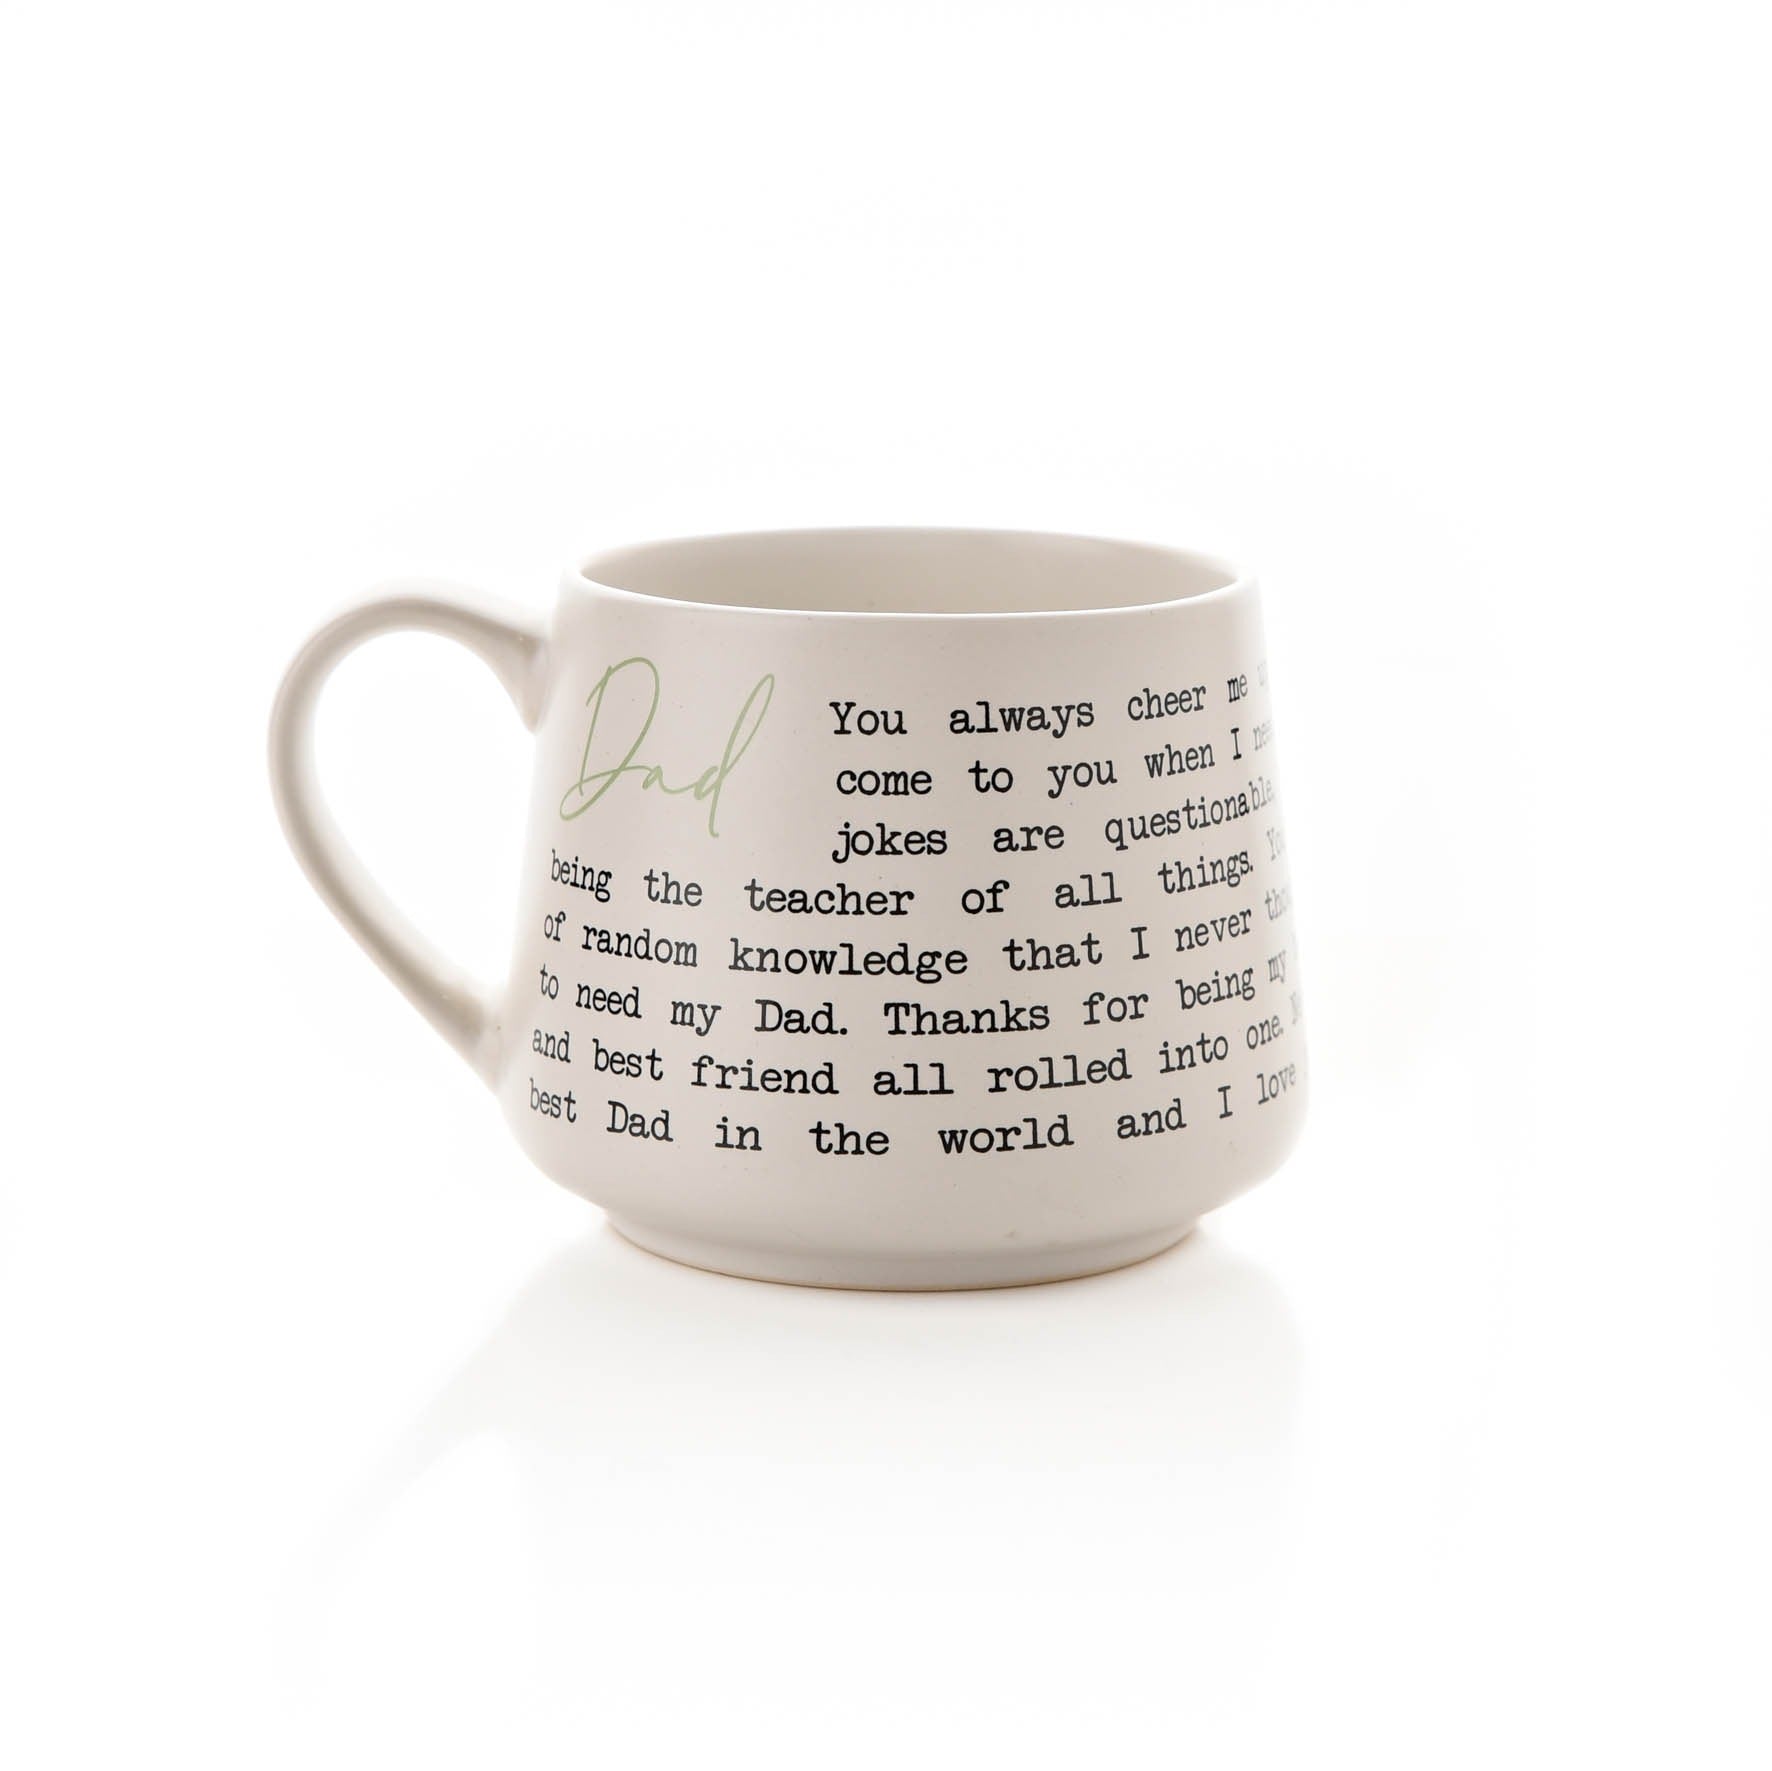 Cream stoneware mug with printed sentimental message for Dad